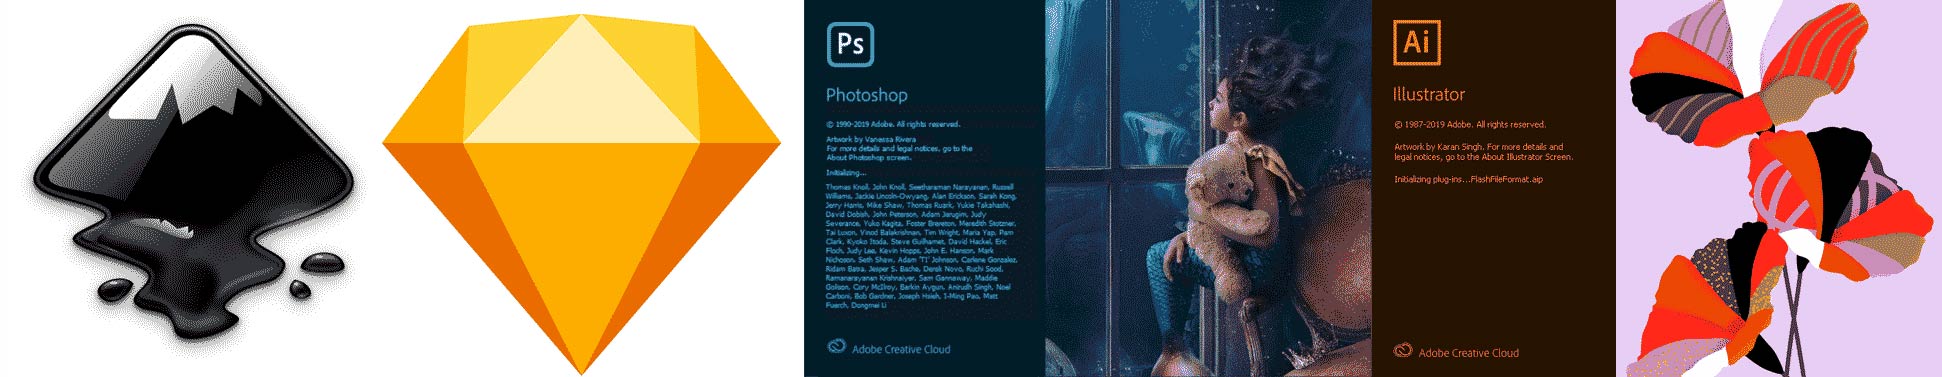 Photoshop CC 2019 Splash Screen